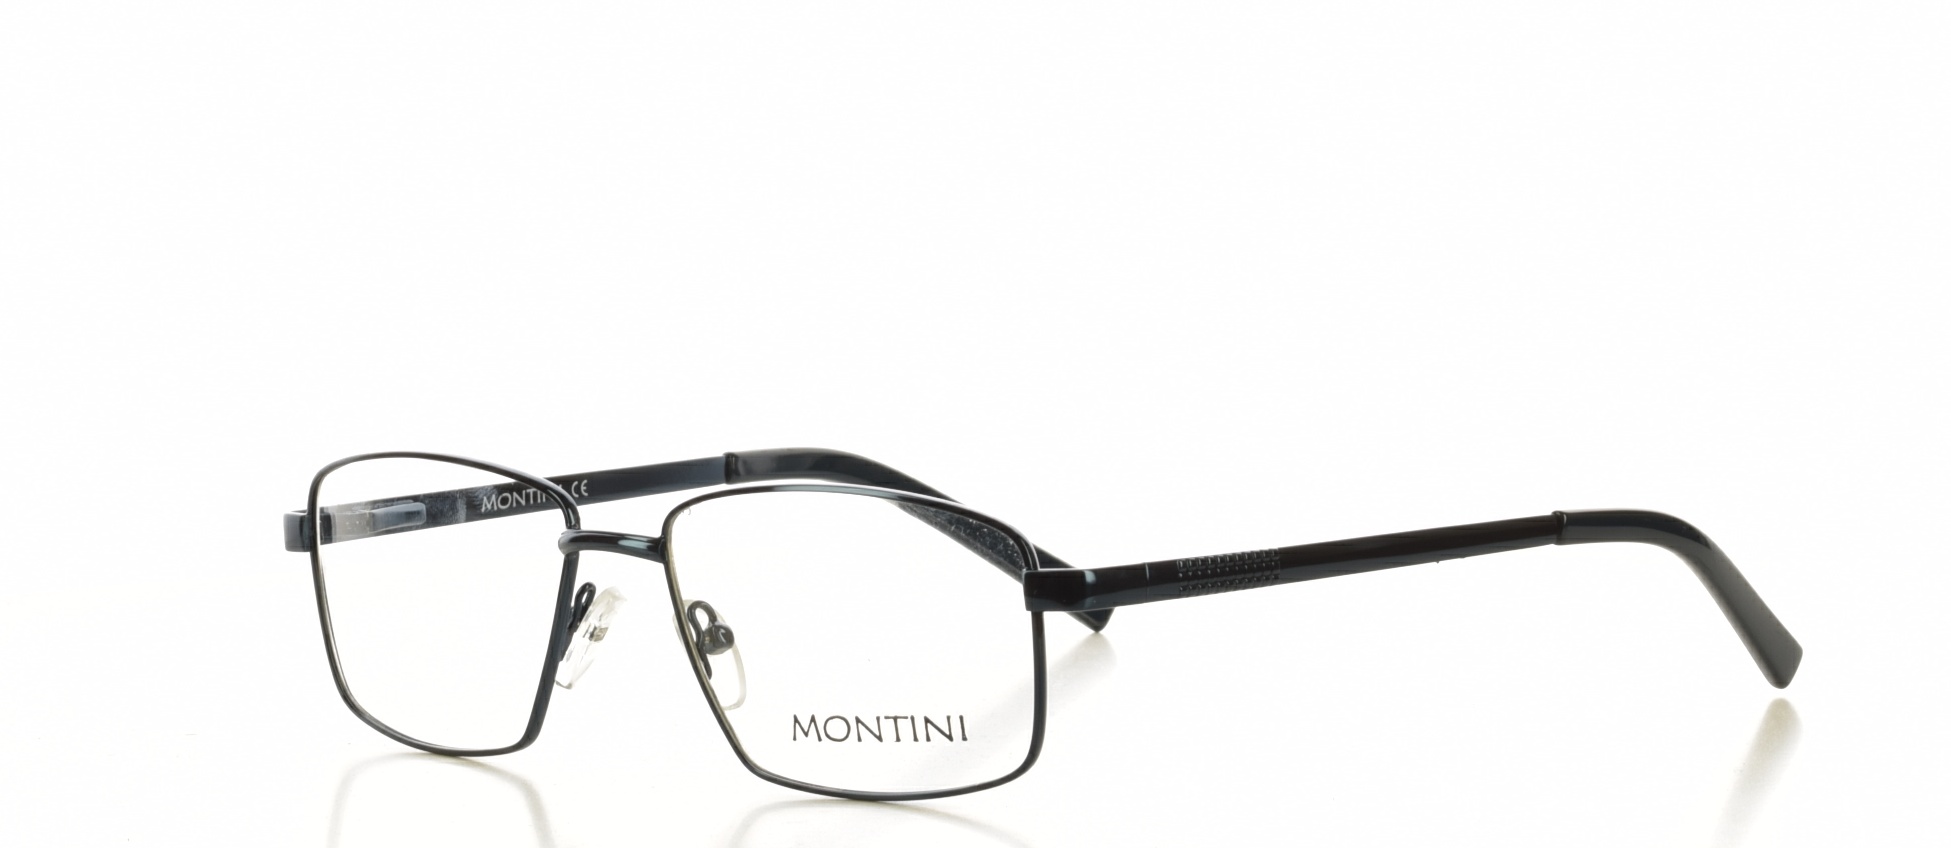 Rama ochelari vedere Monitini